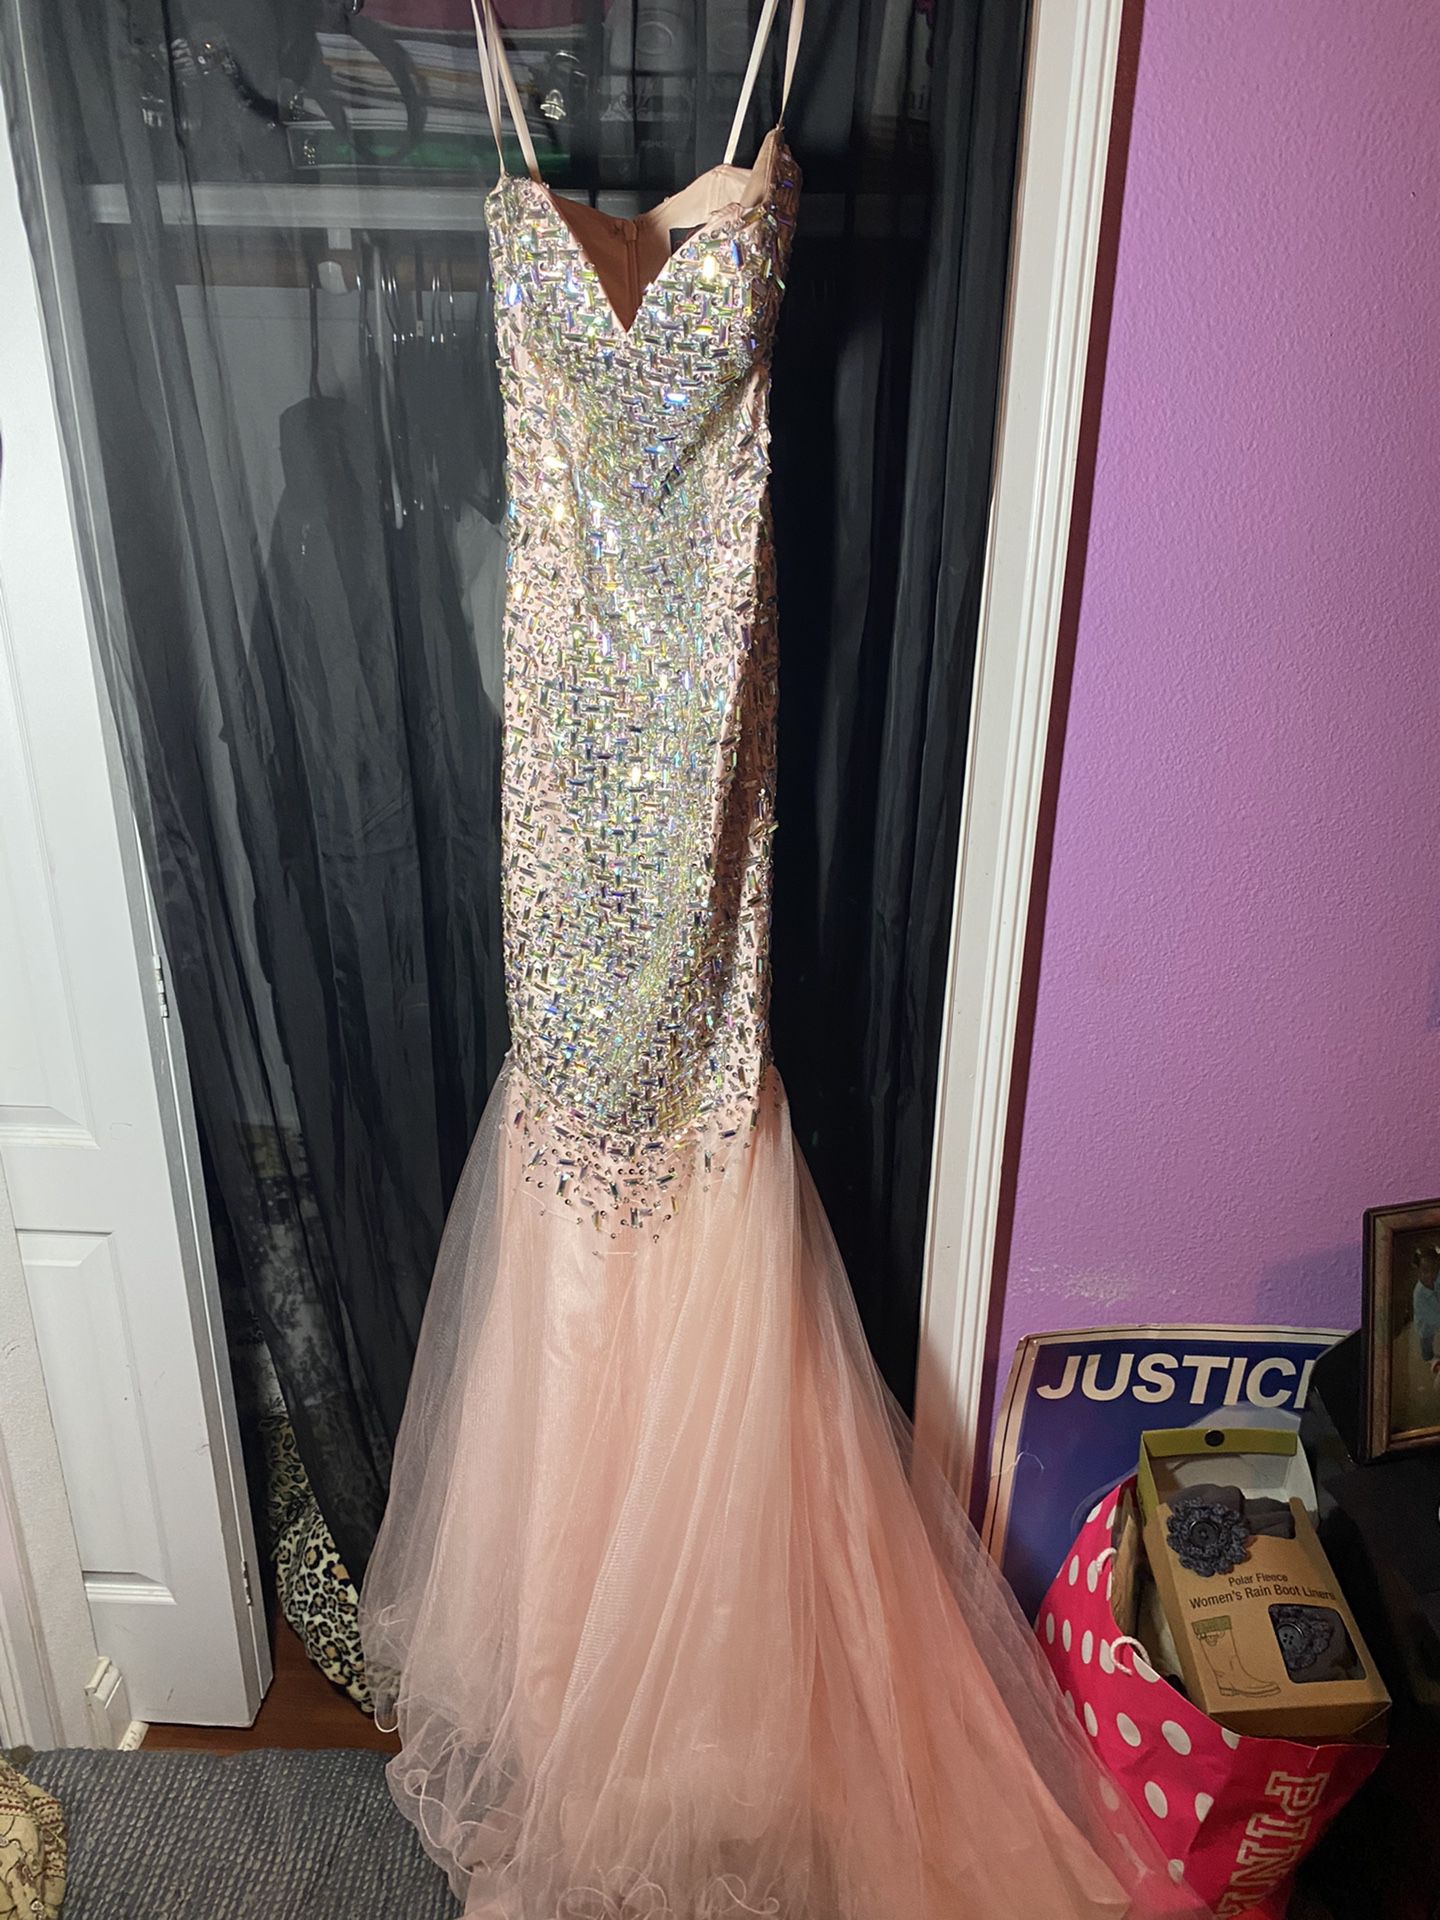 Blush Pink Mermaid Style Prom Dress